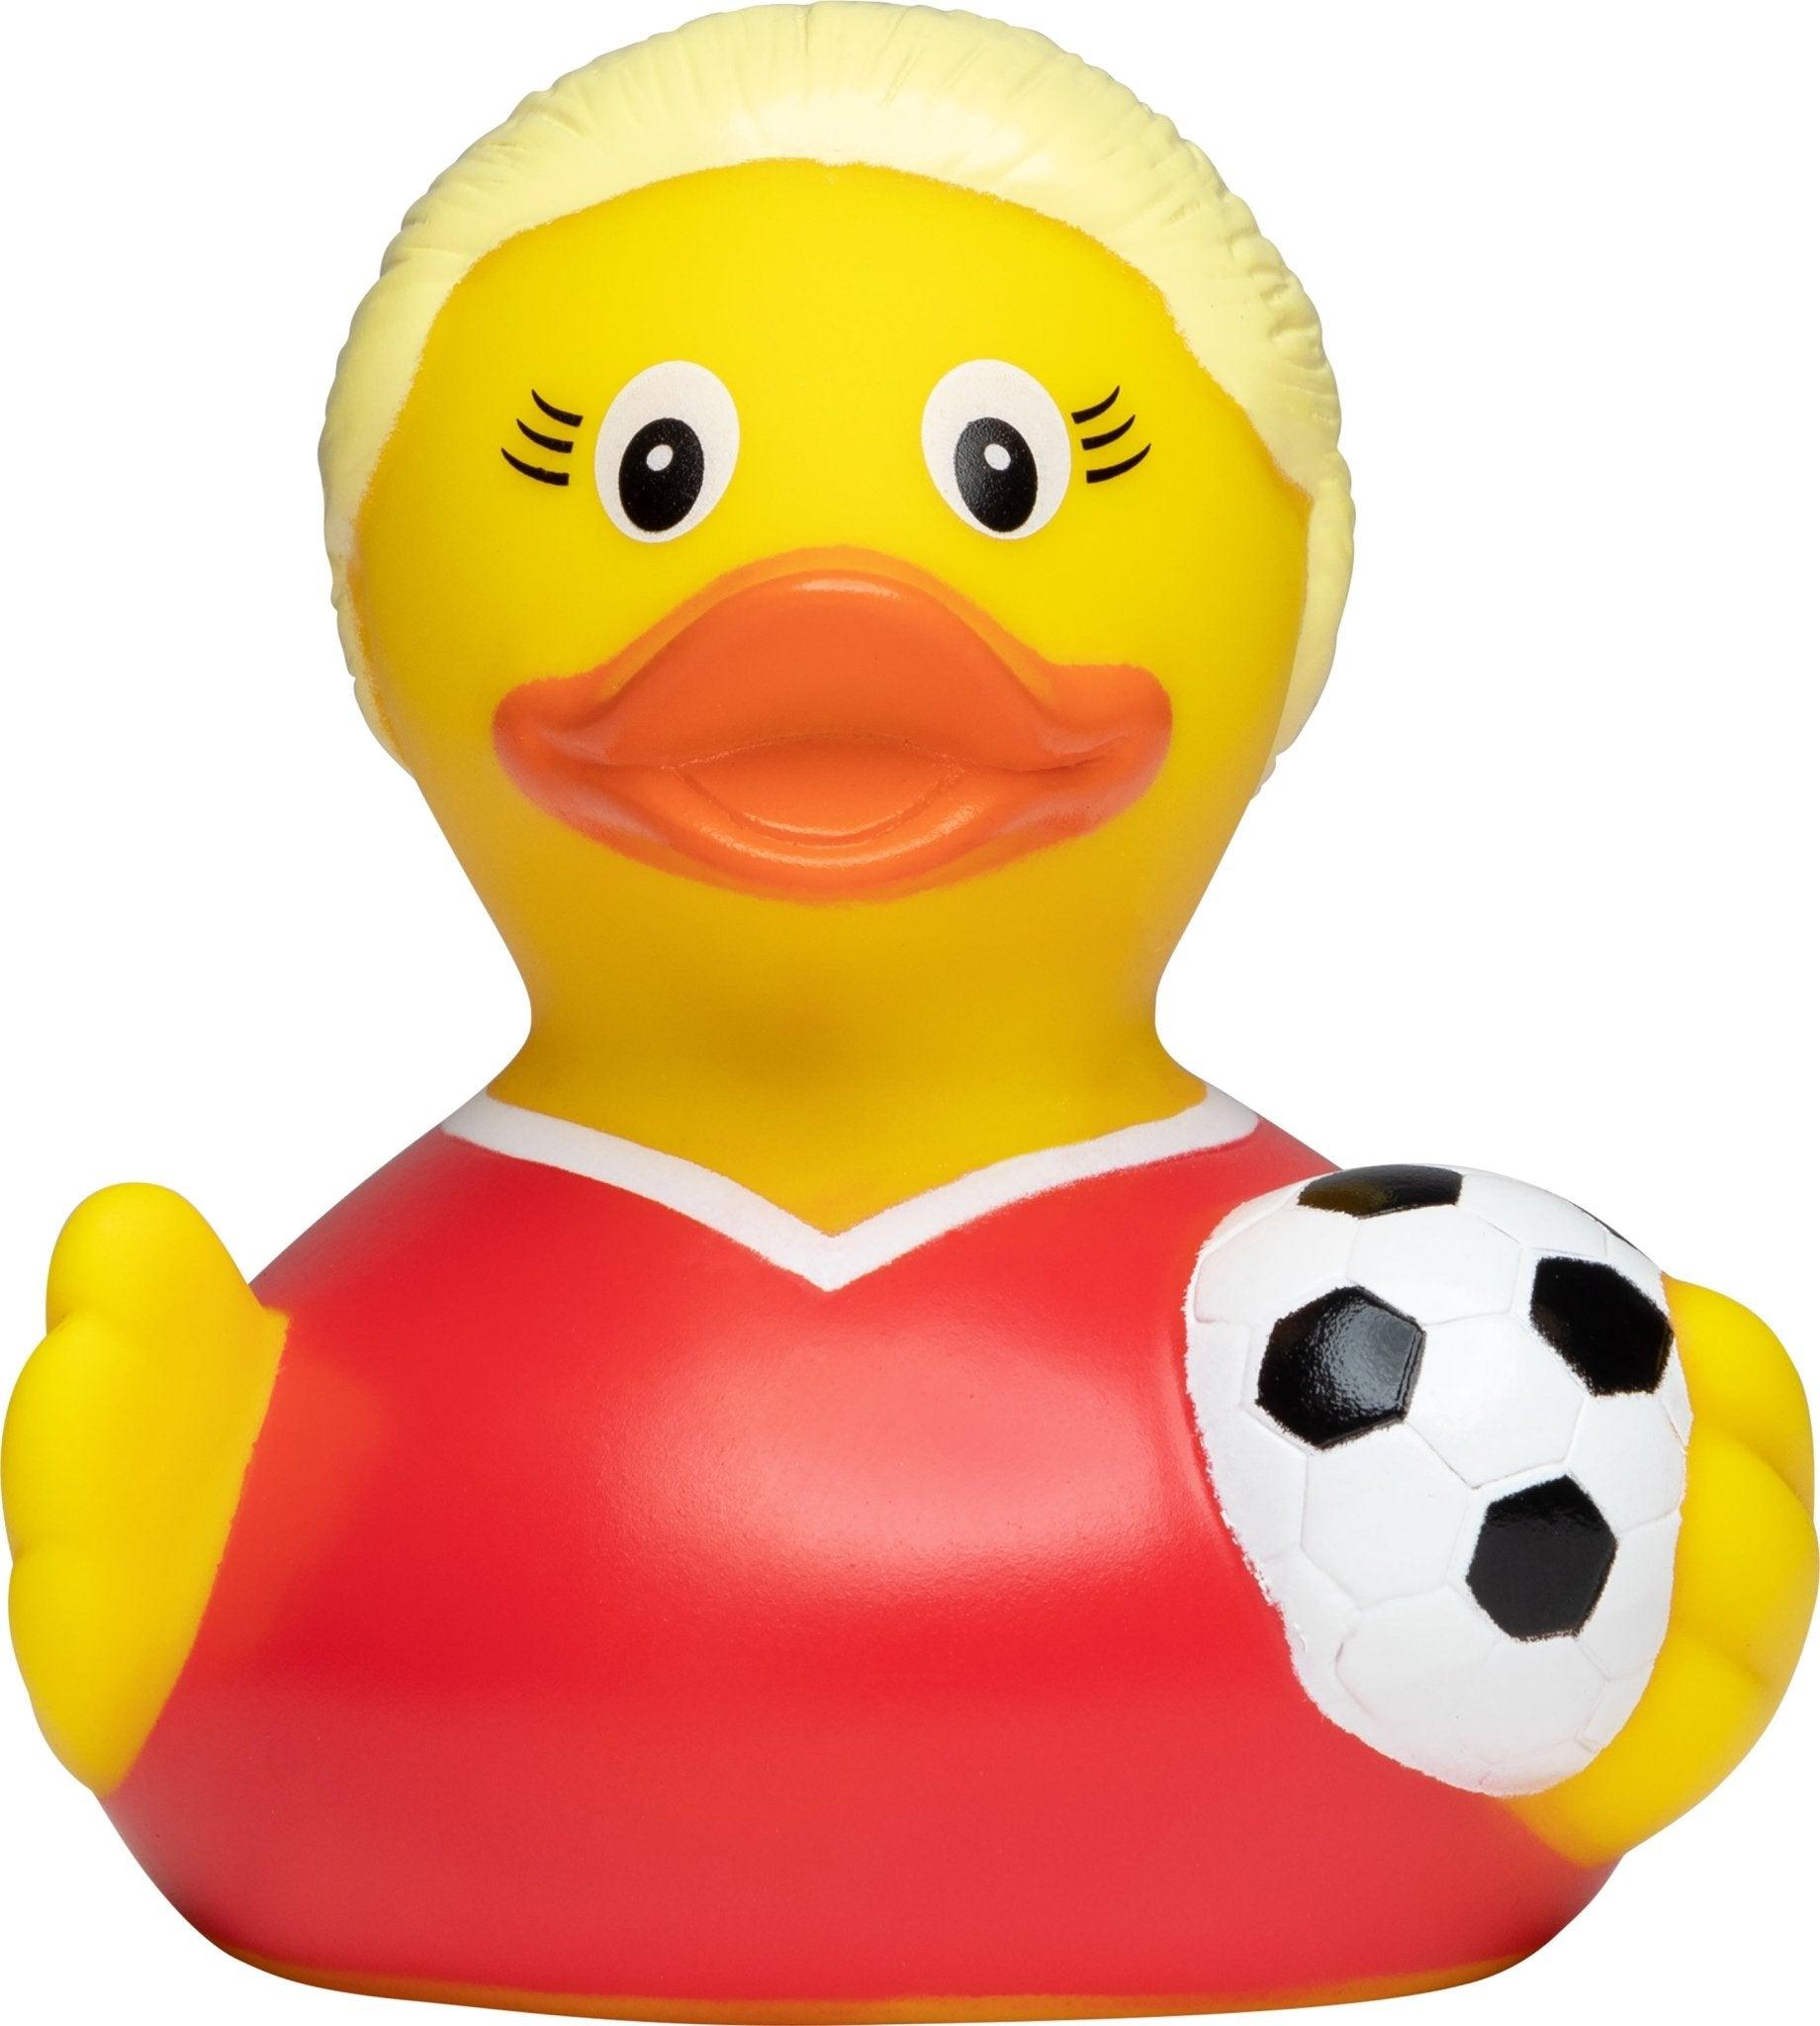 Fußballerin Fußball Spielerin Quietsche-Ente / Badeente (auch als Werbegeschenk geeignet) - HalloGeschenk.de #geschenkideen# #personalisiert# #geschenk#